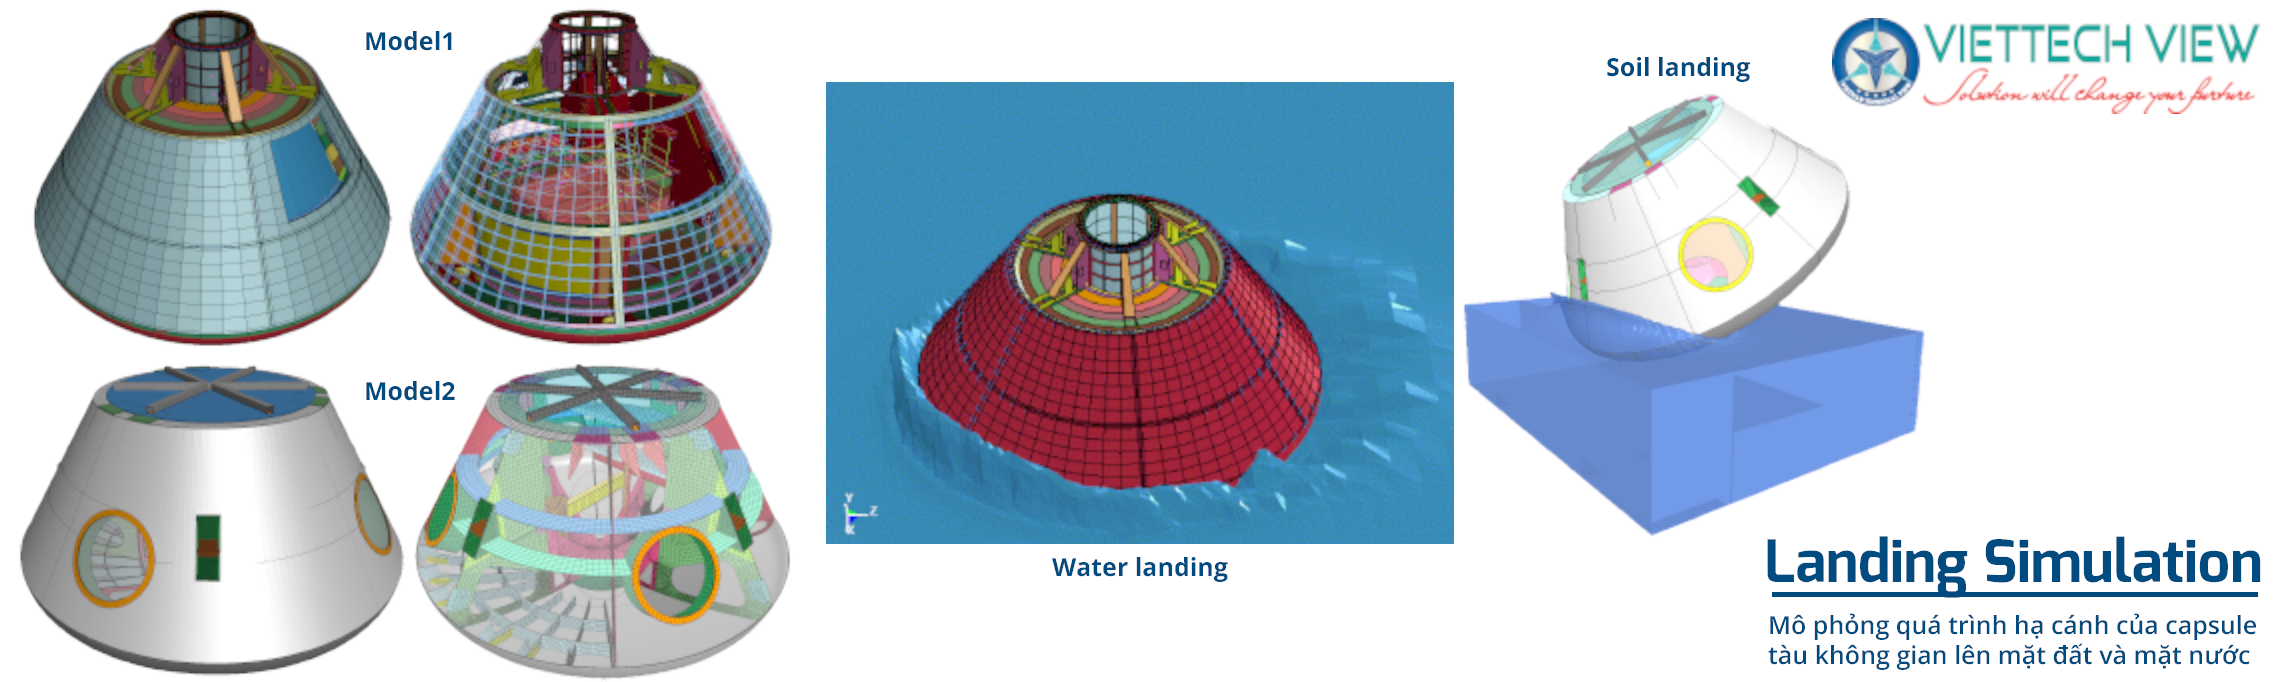 Water landing characteristic of Space capsule_-07-04-2022-13-25-03.png